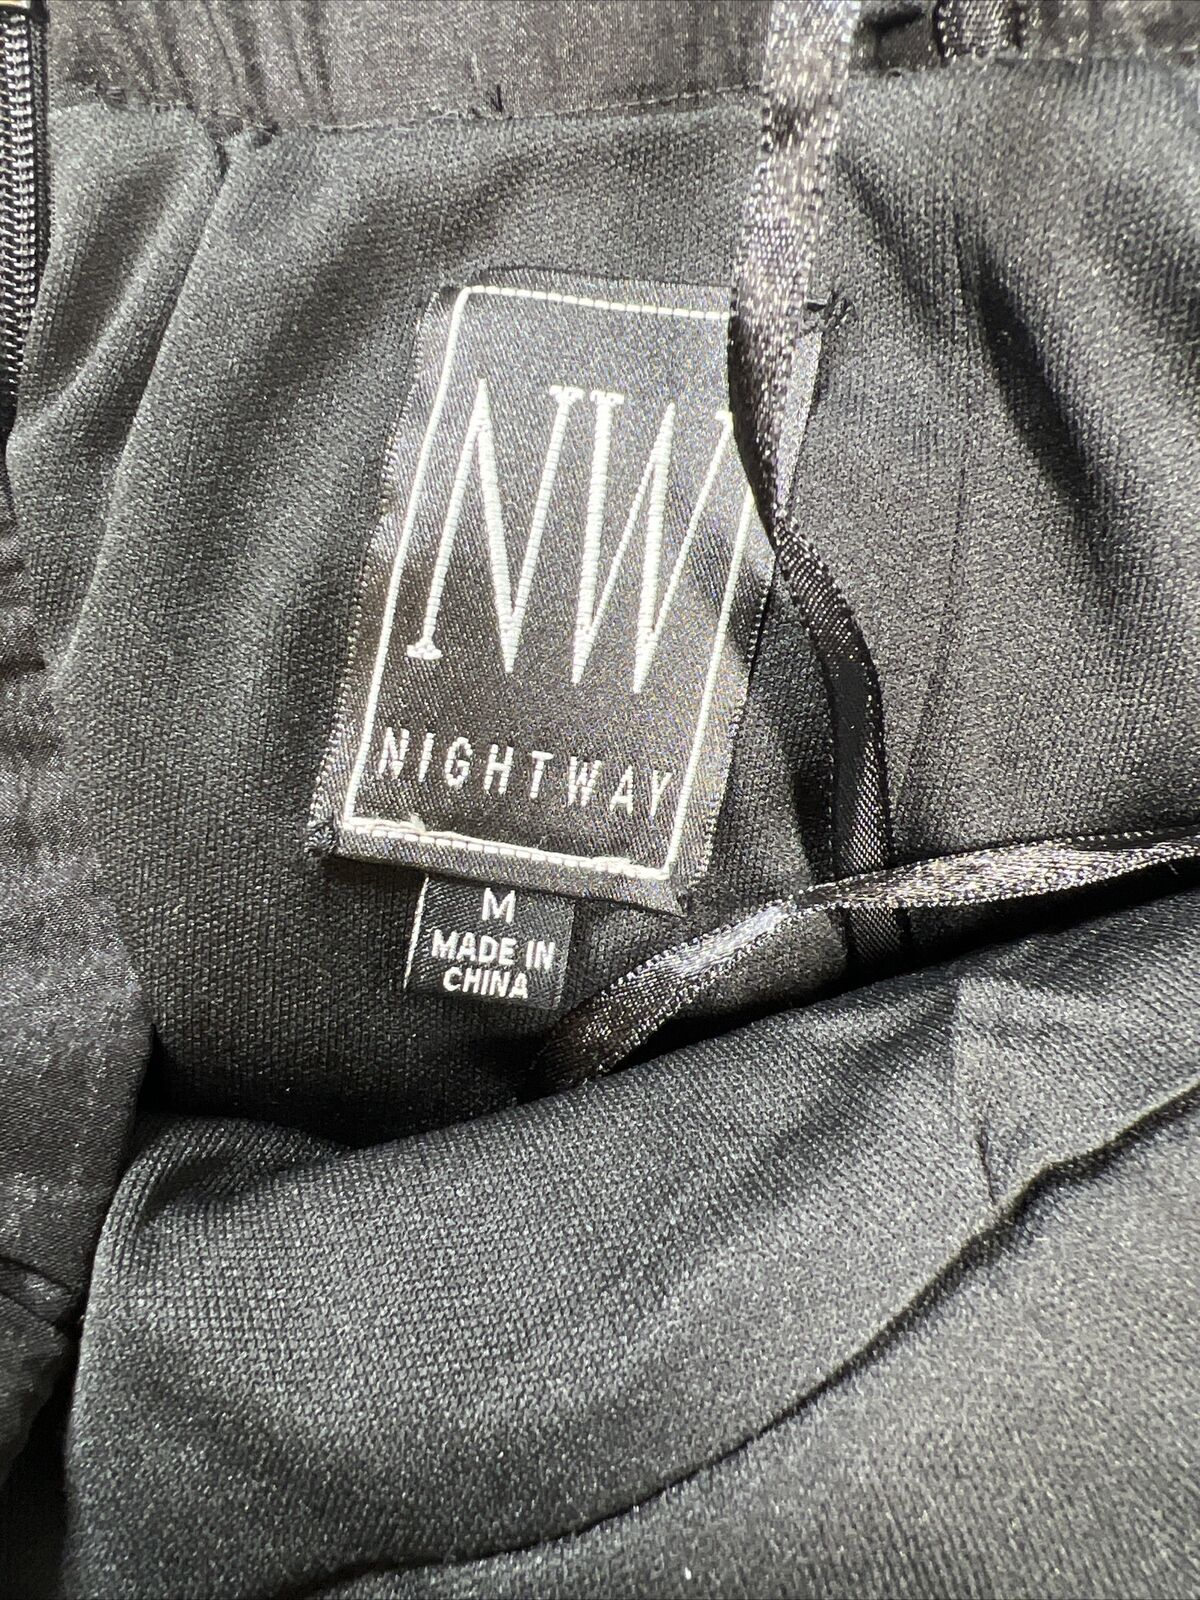 NEW Nightway Women's Black Sequin Strapless Dress - M